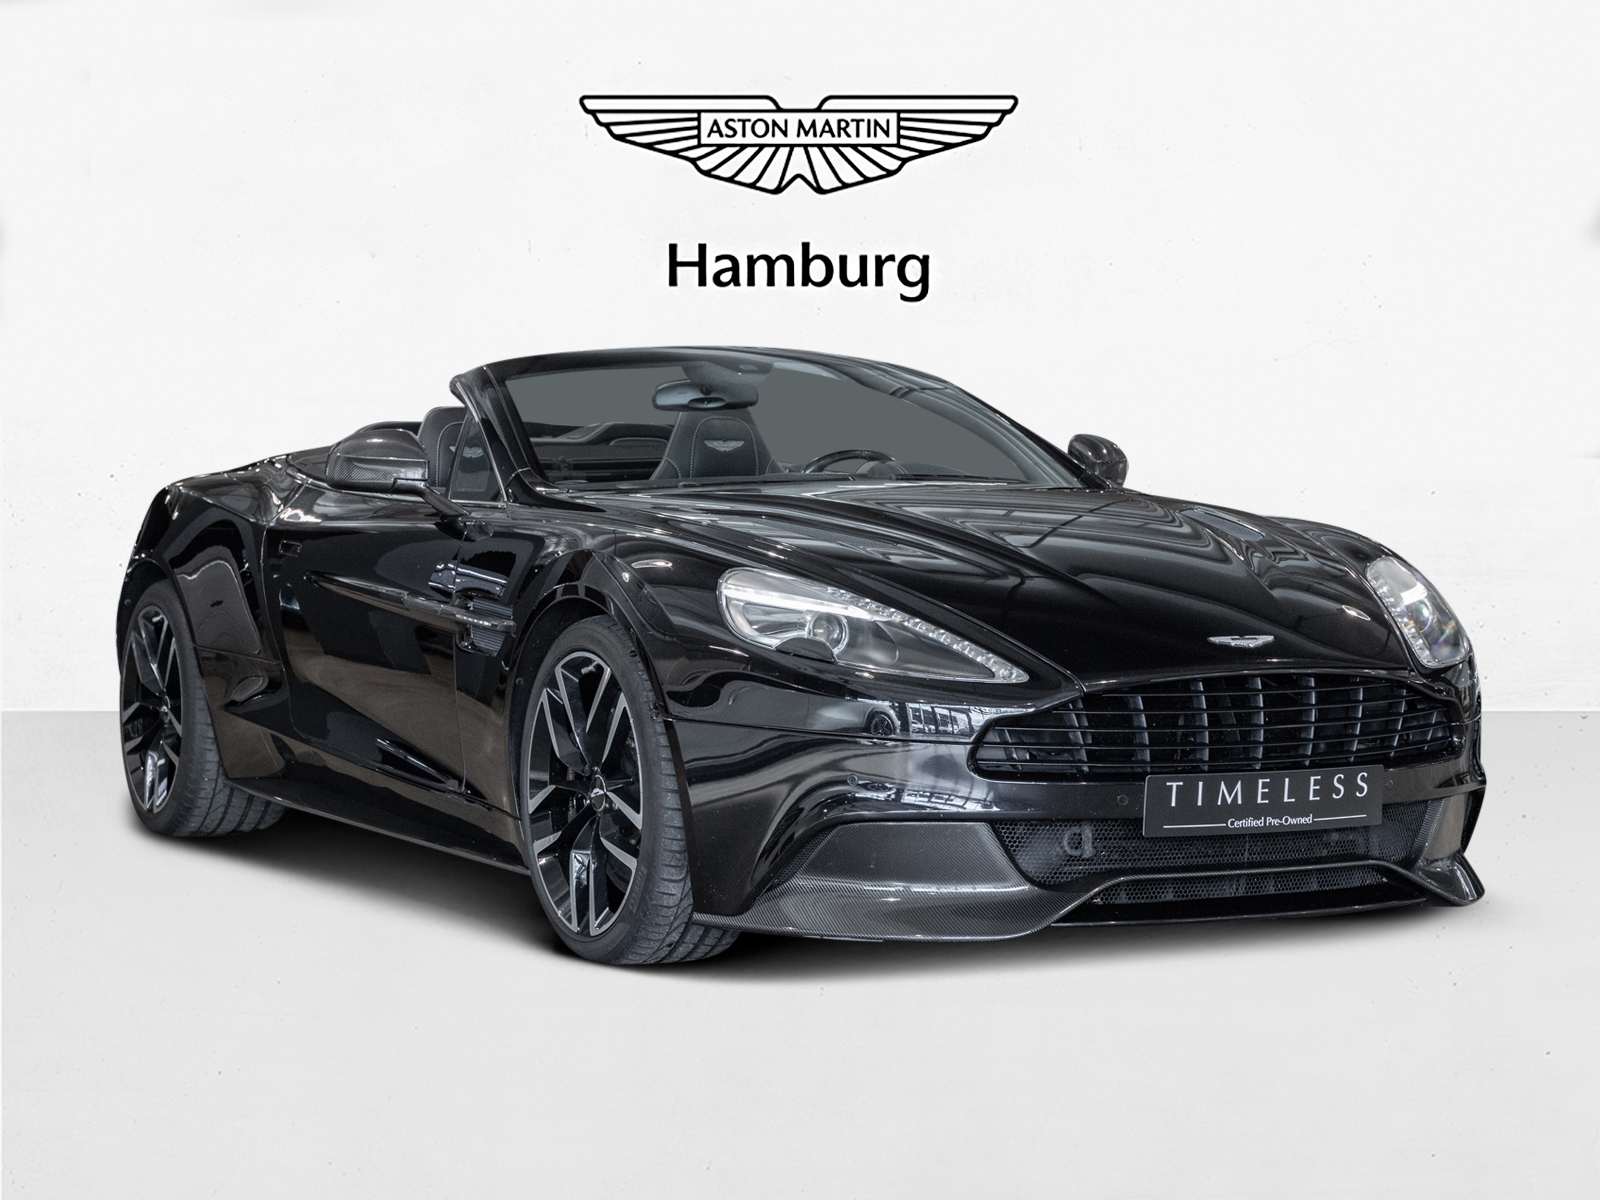 Aston Martin Vanquish Volante - Aston Martin Hamburg